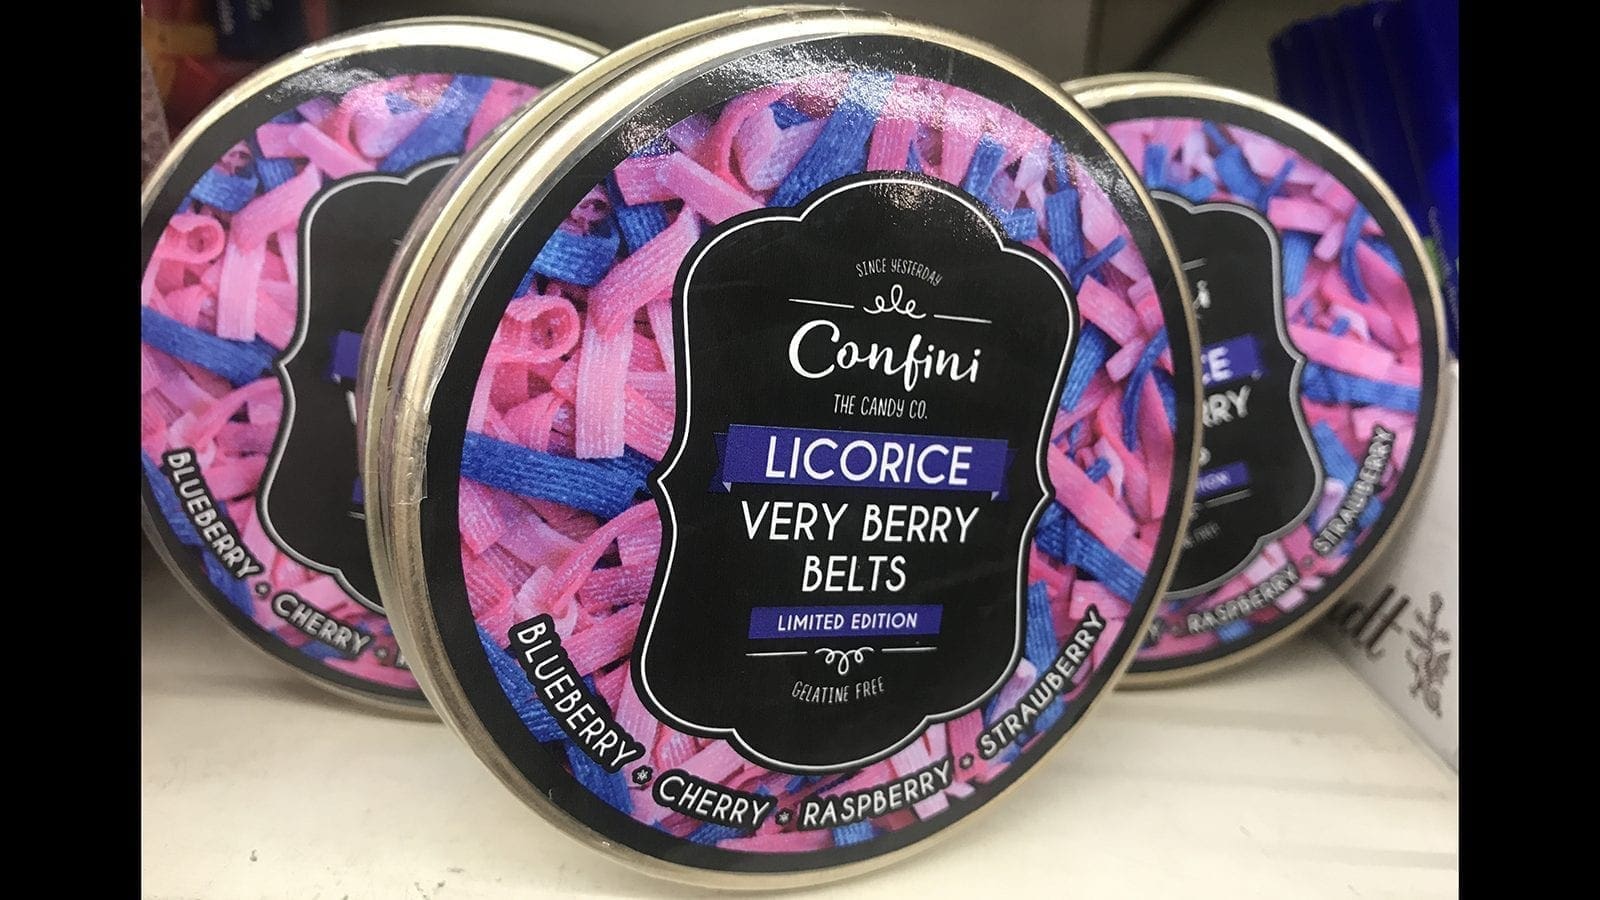 Confini Ltd. introduces flavoured licorice candies